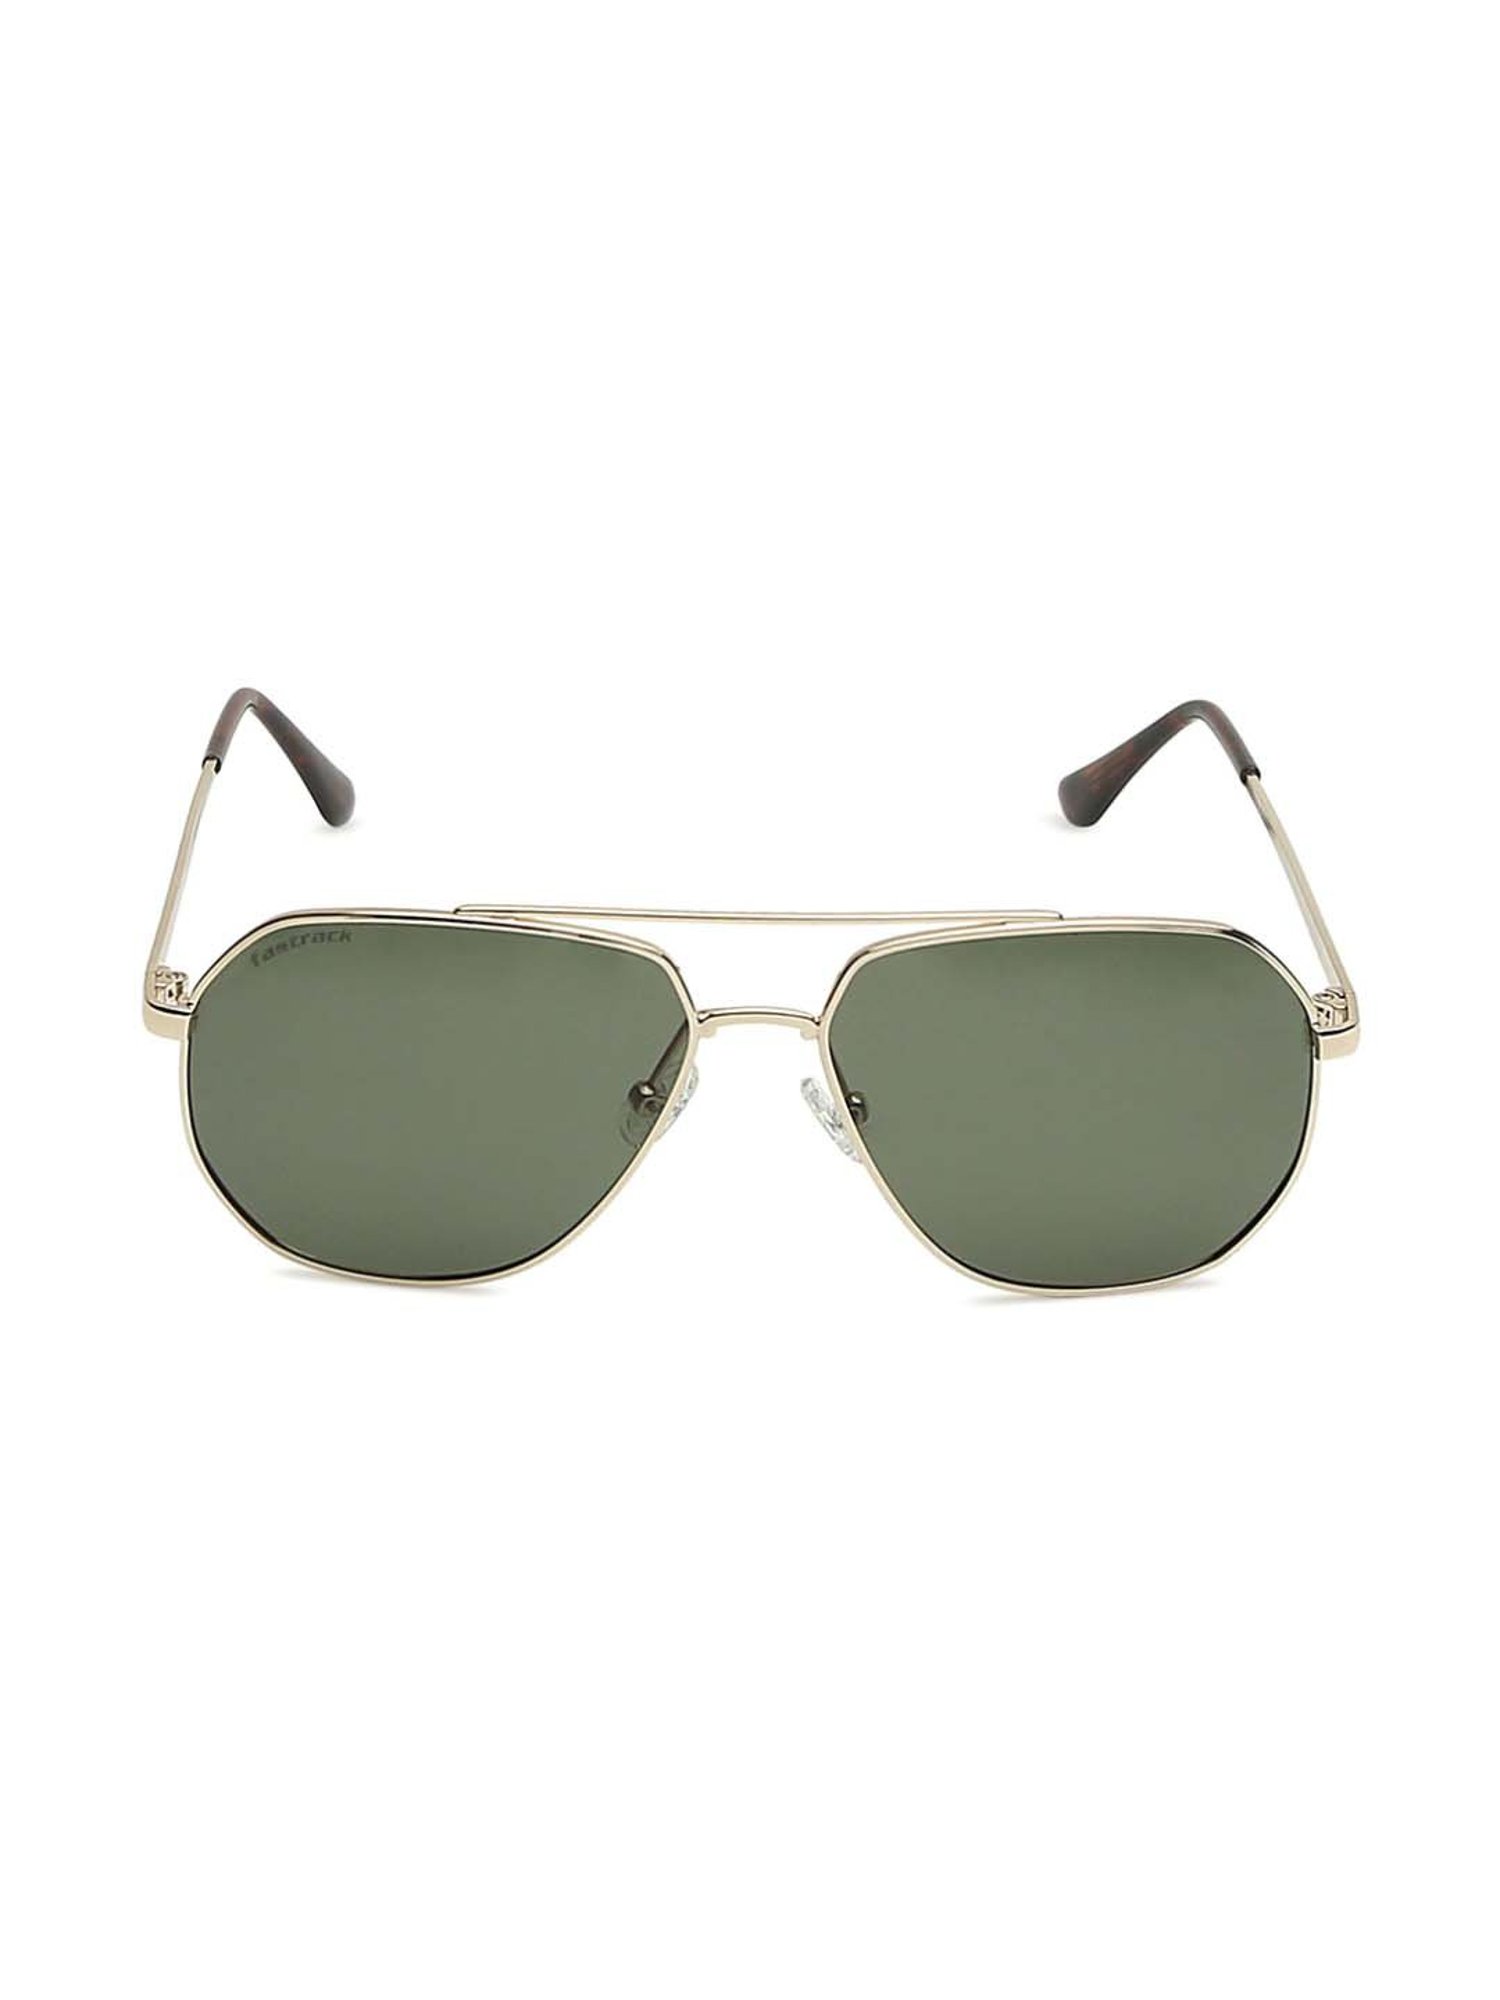 Buy SUNGAIT Polygon Aviator Sunglasses for Men Polarized Trendy Square Sun  Glasses Retro Pilot Shades UV Protection (Amber Frame/Gold Rim/Brown Lens,  60)SGT375-SJKCP at Amazon.in